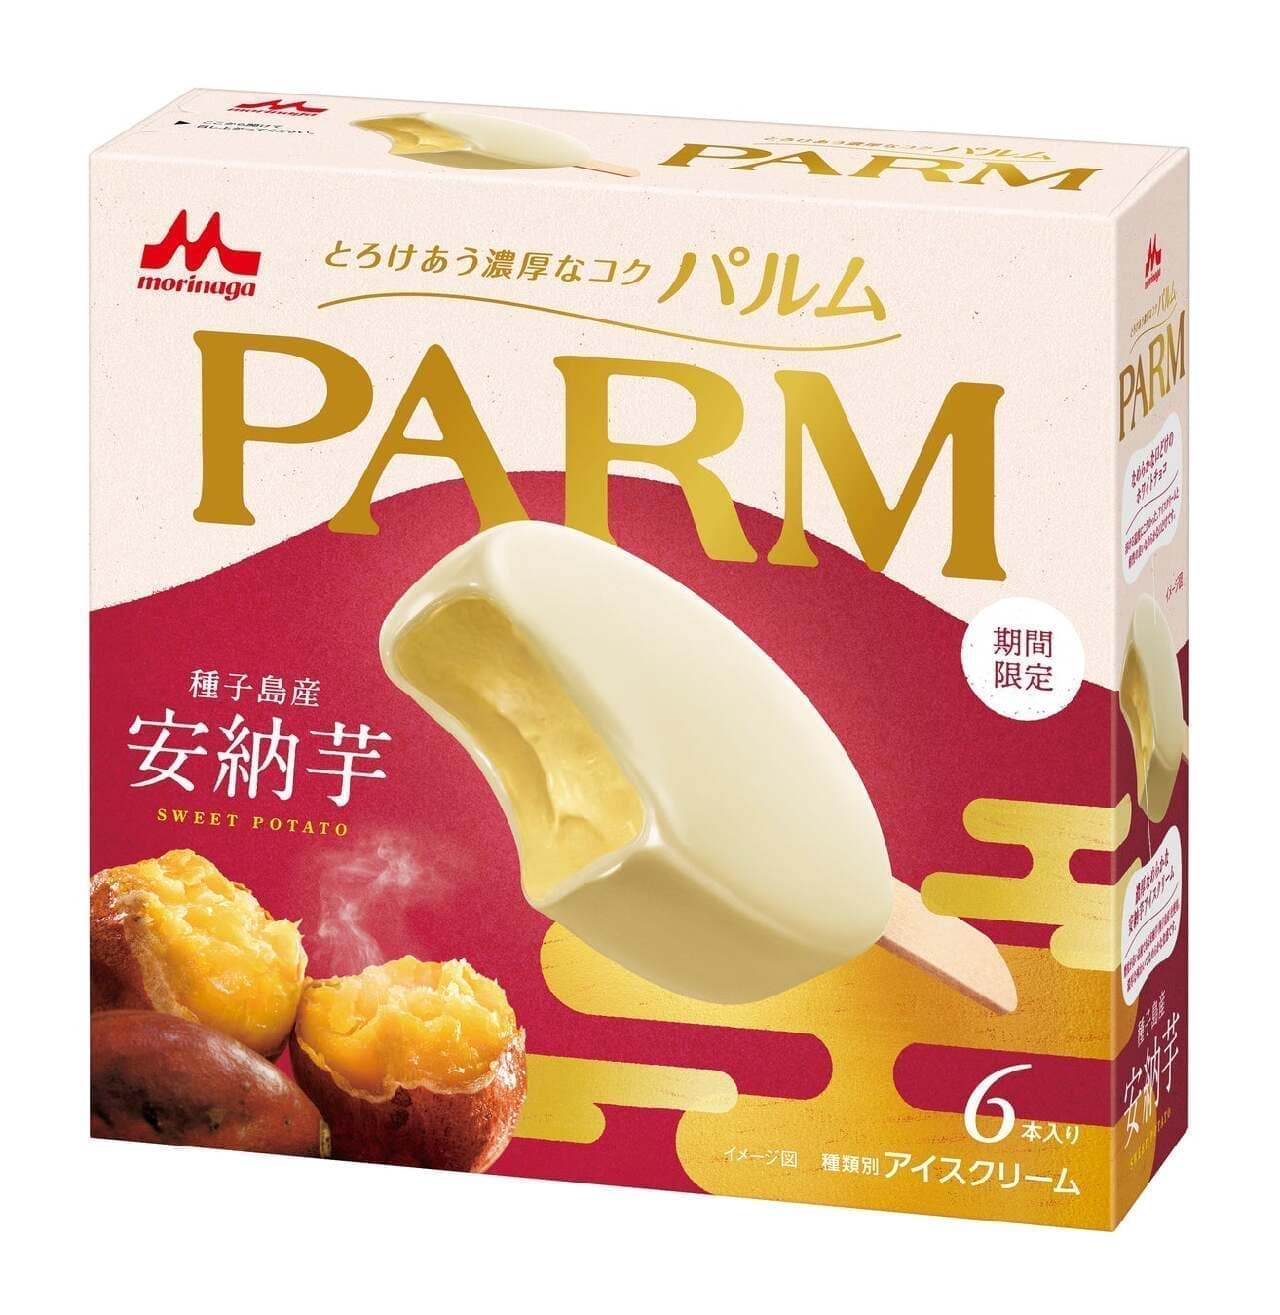 Morinaga Milk Industry "Palm Anno sweet potato